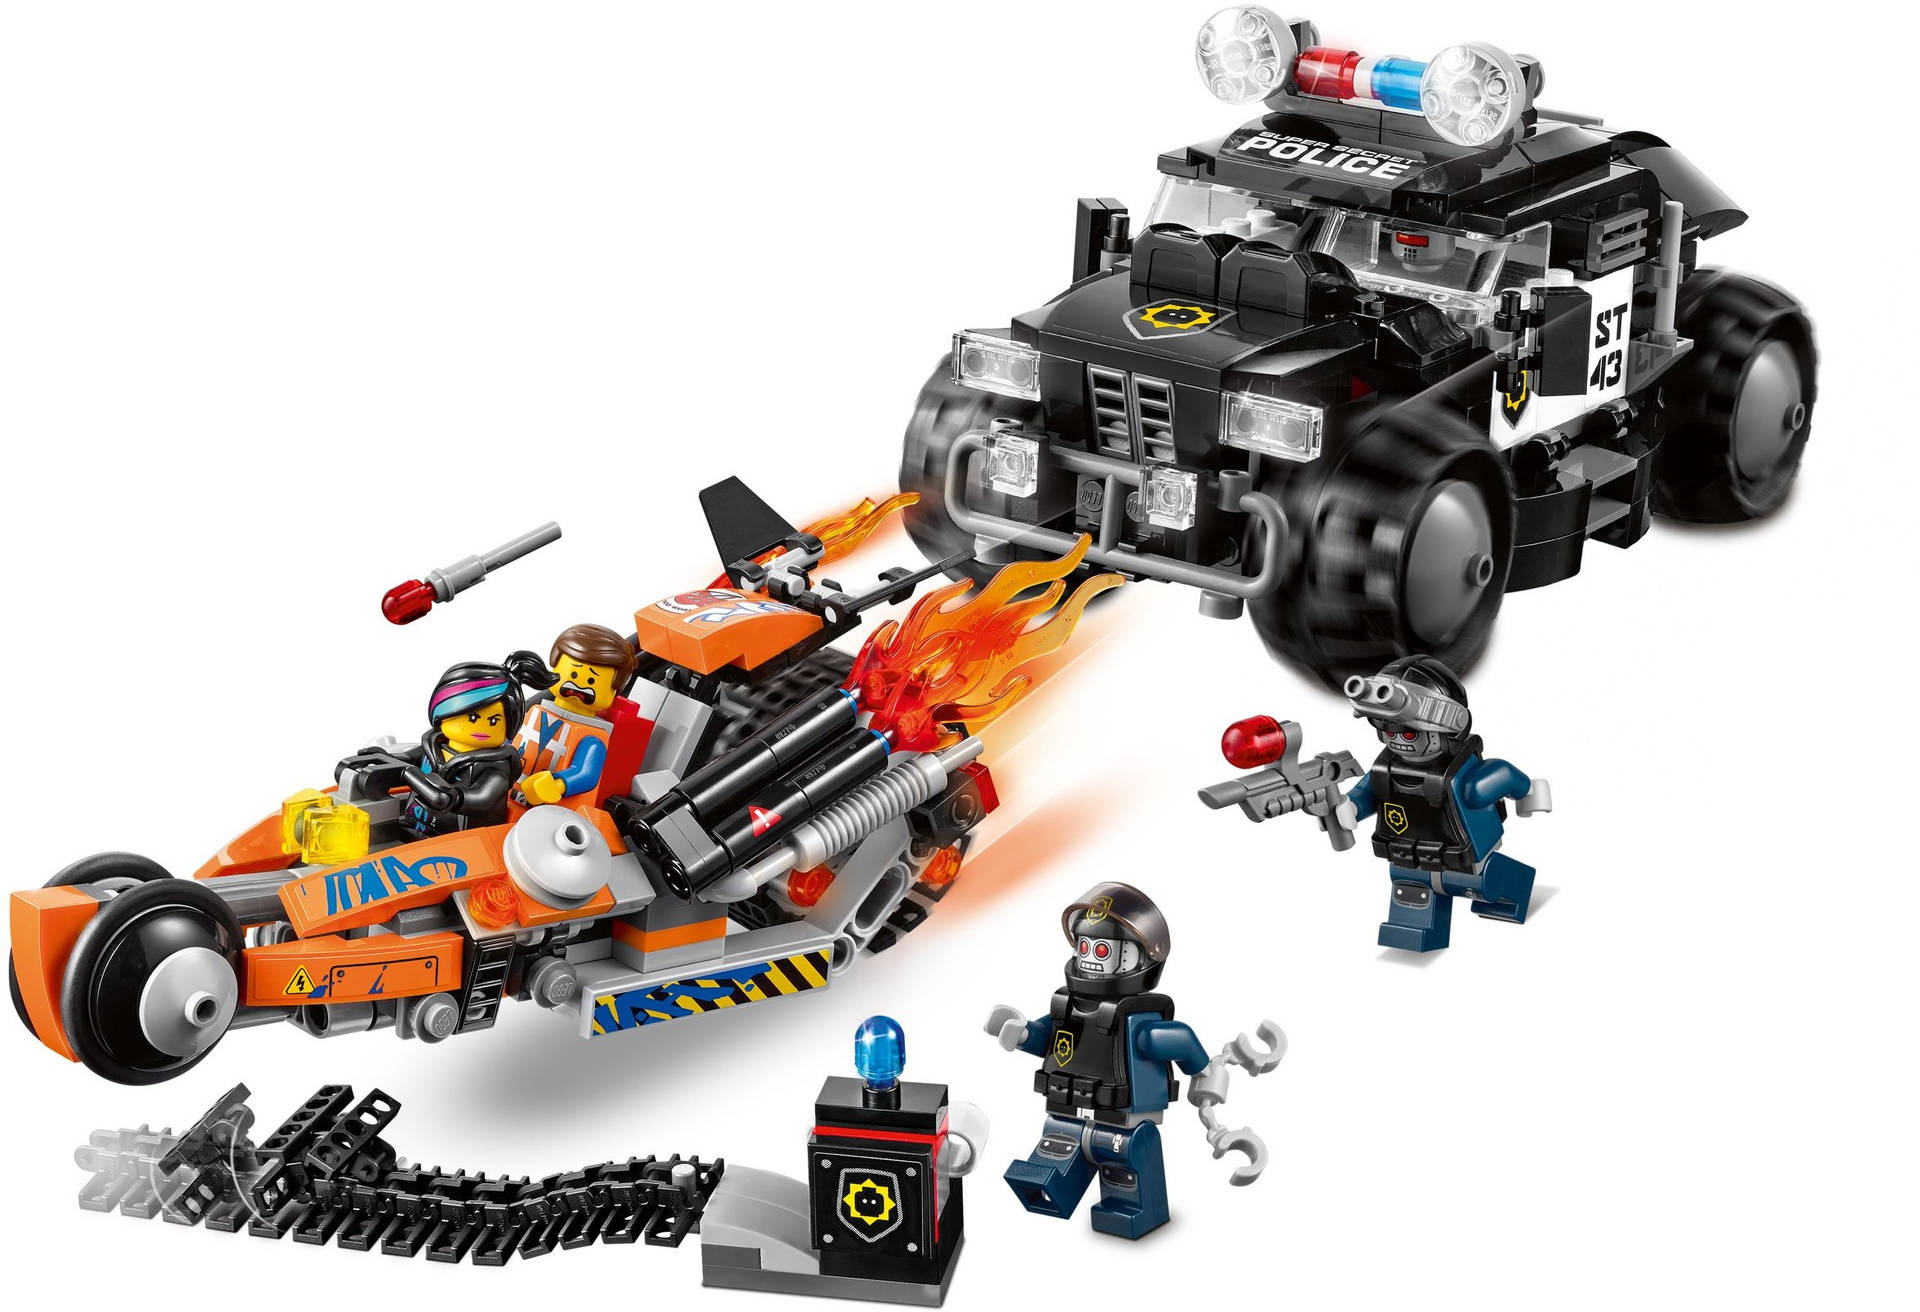 The Lego Movie Police Tie-in